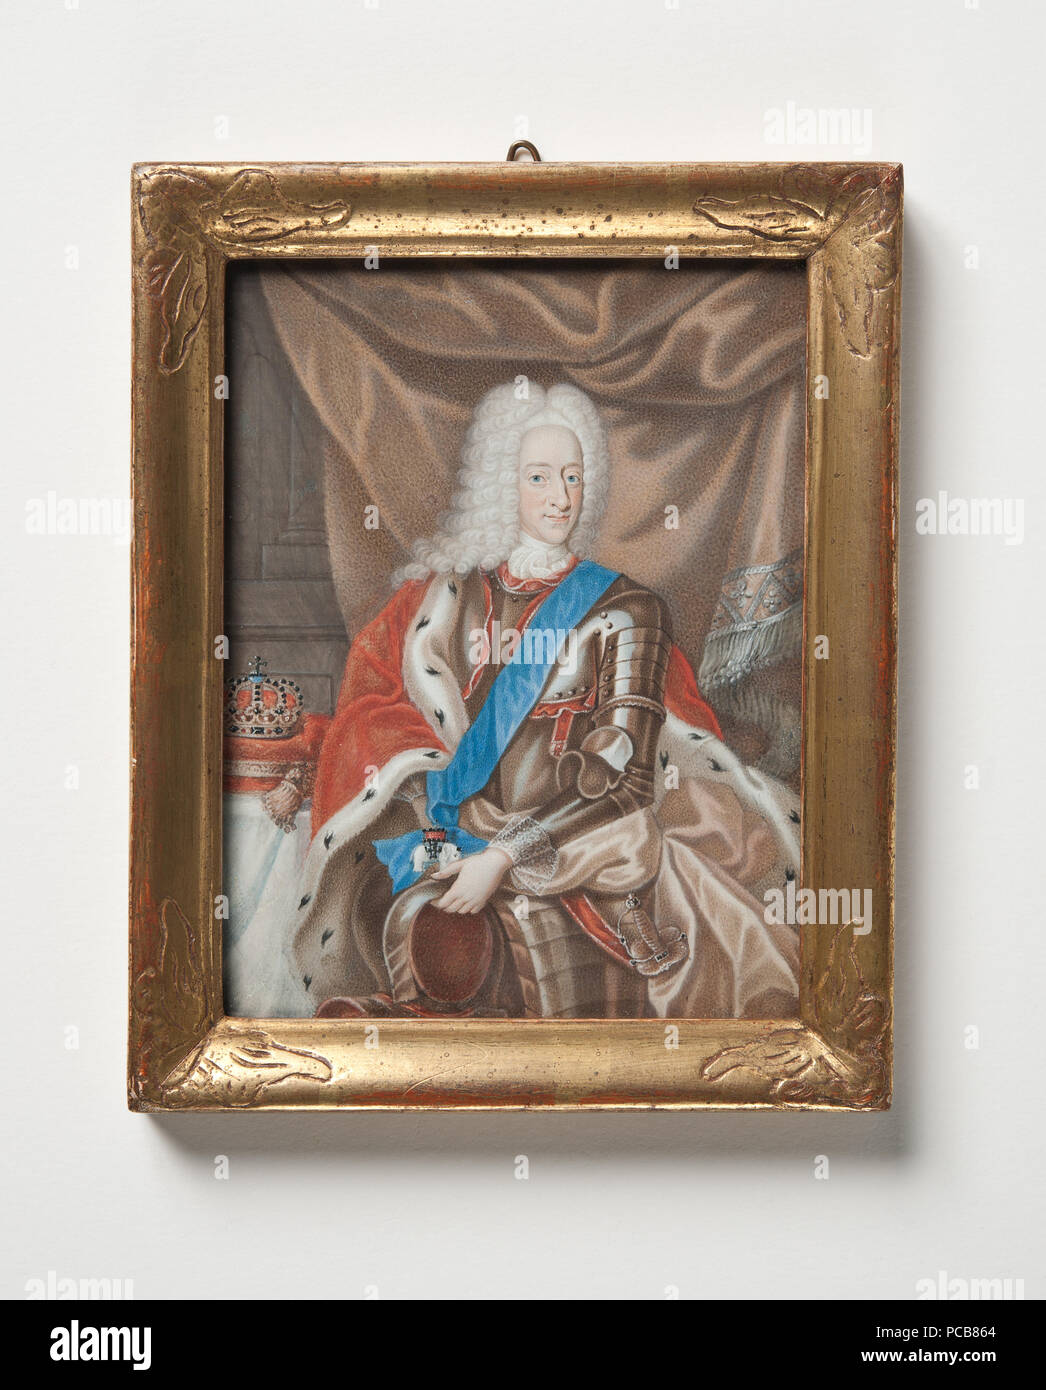 ANOINTING & CORONATION OF KING FREDERIK VI DENMARK PAINTING ART CANVAS PRINT 